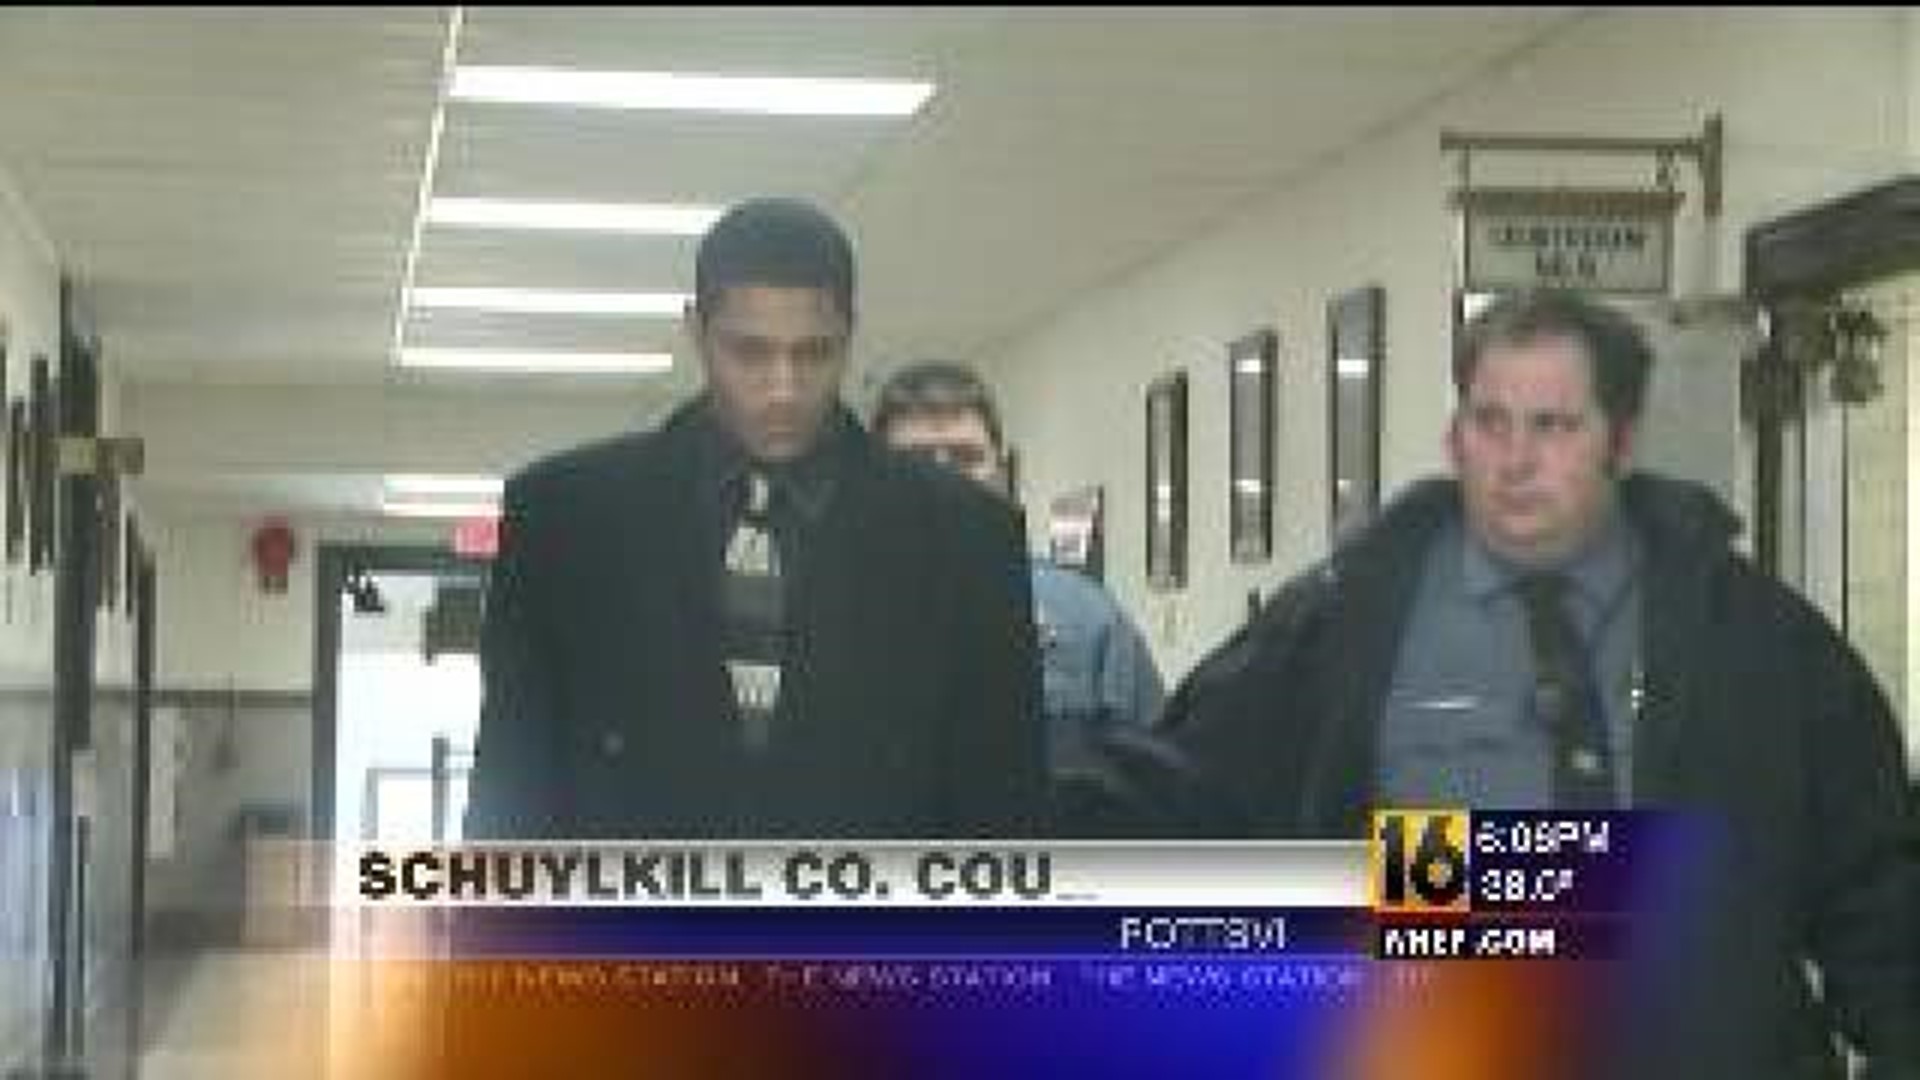 Guilty of Murder in Schuylkill County